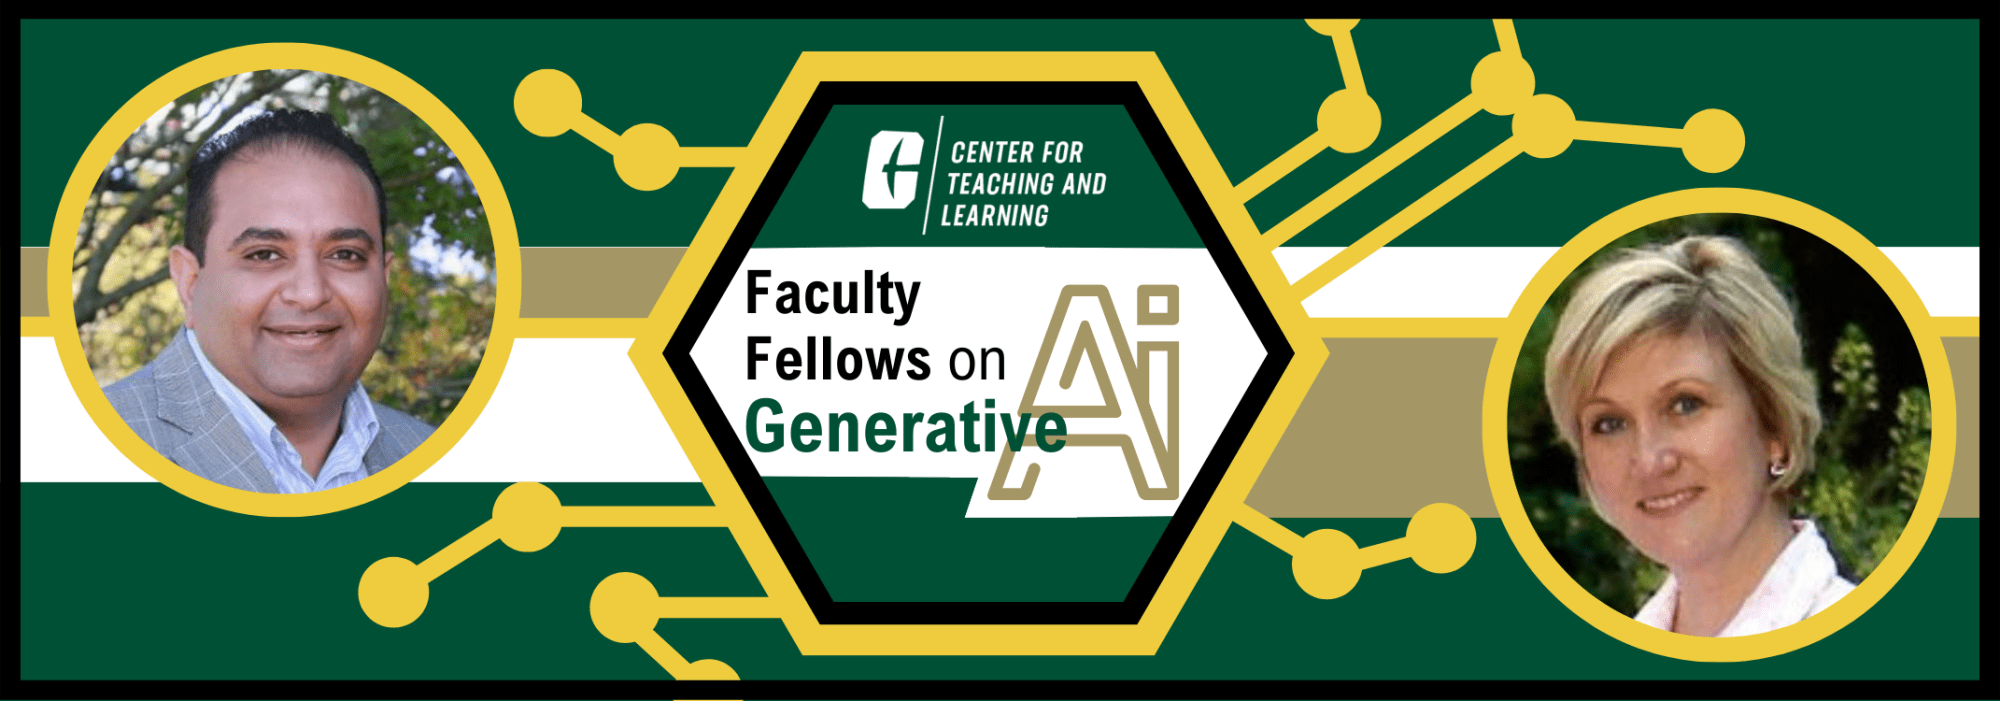 Faculty Fellows graphic